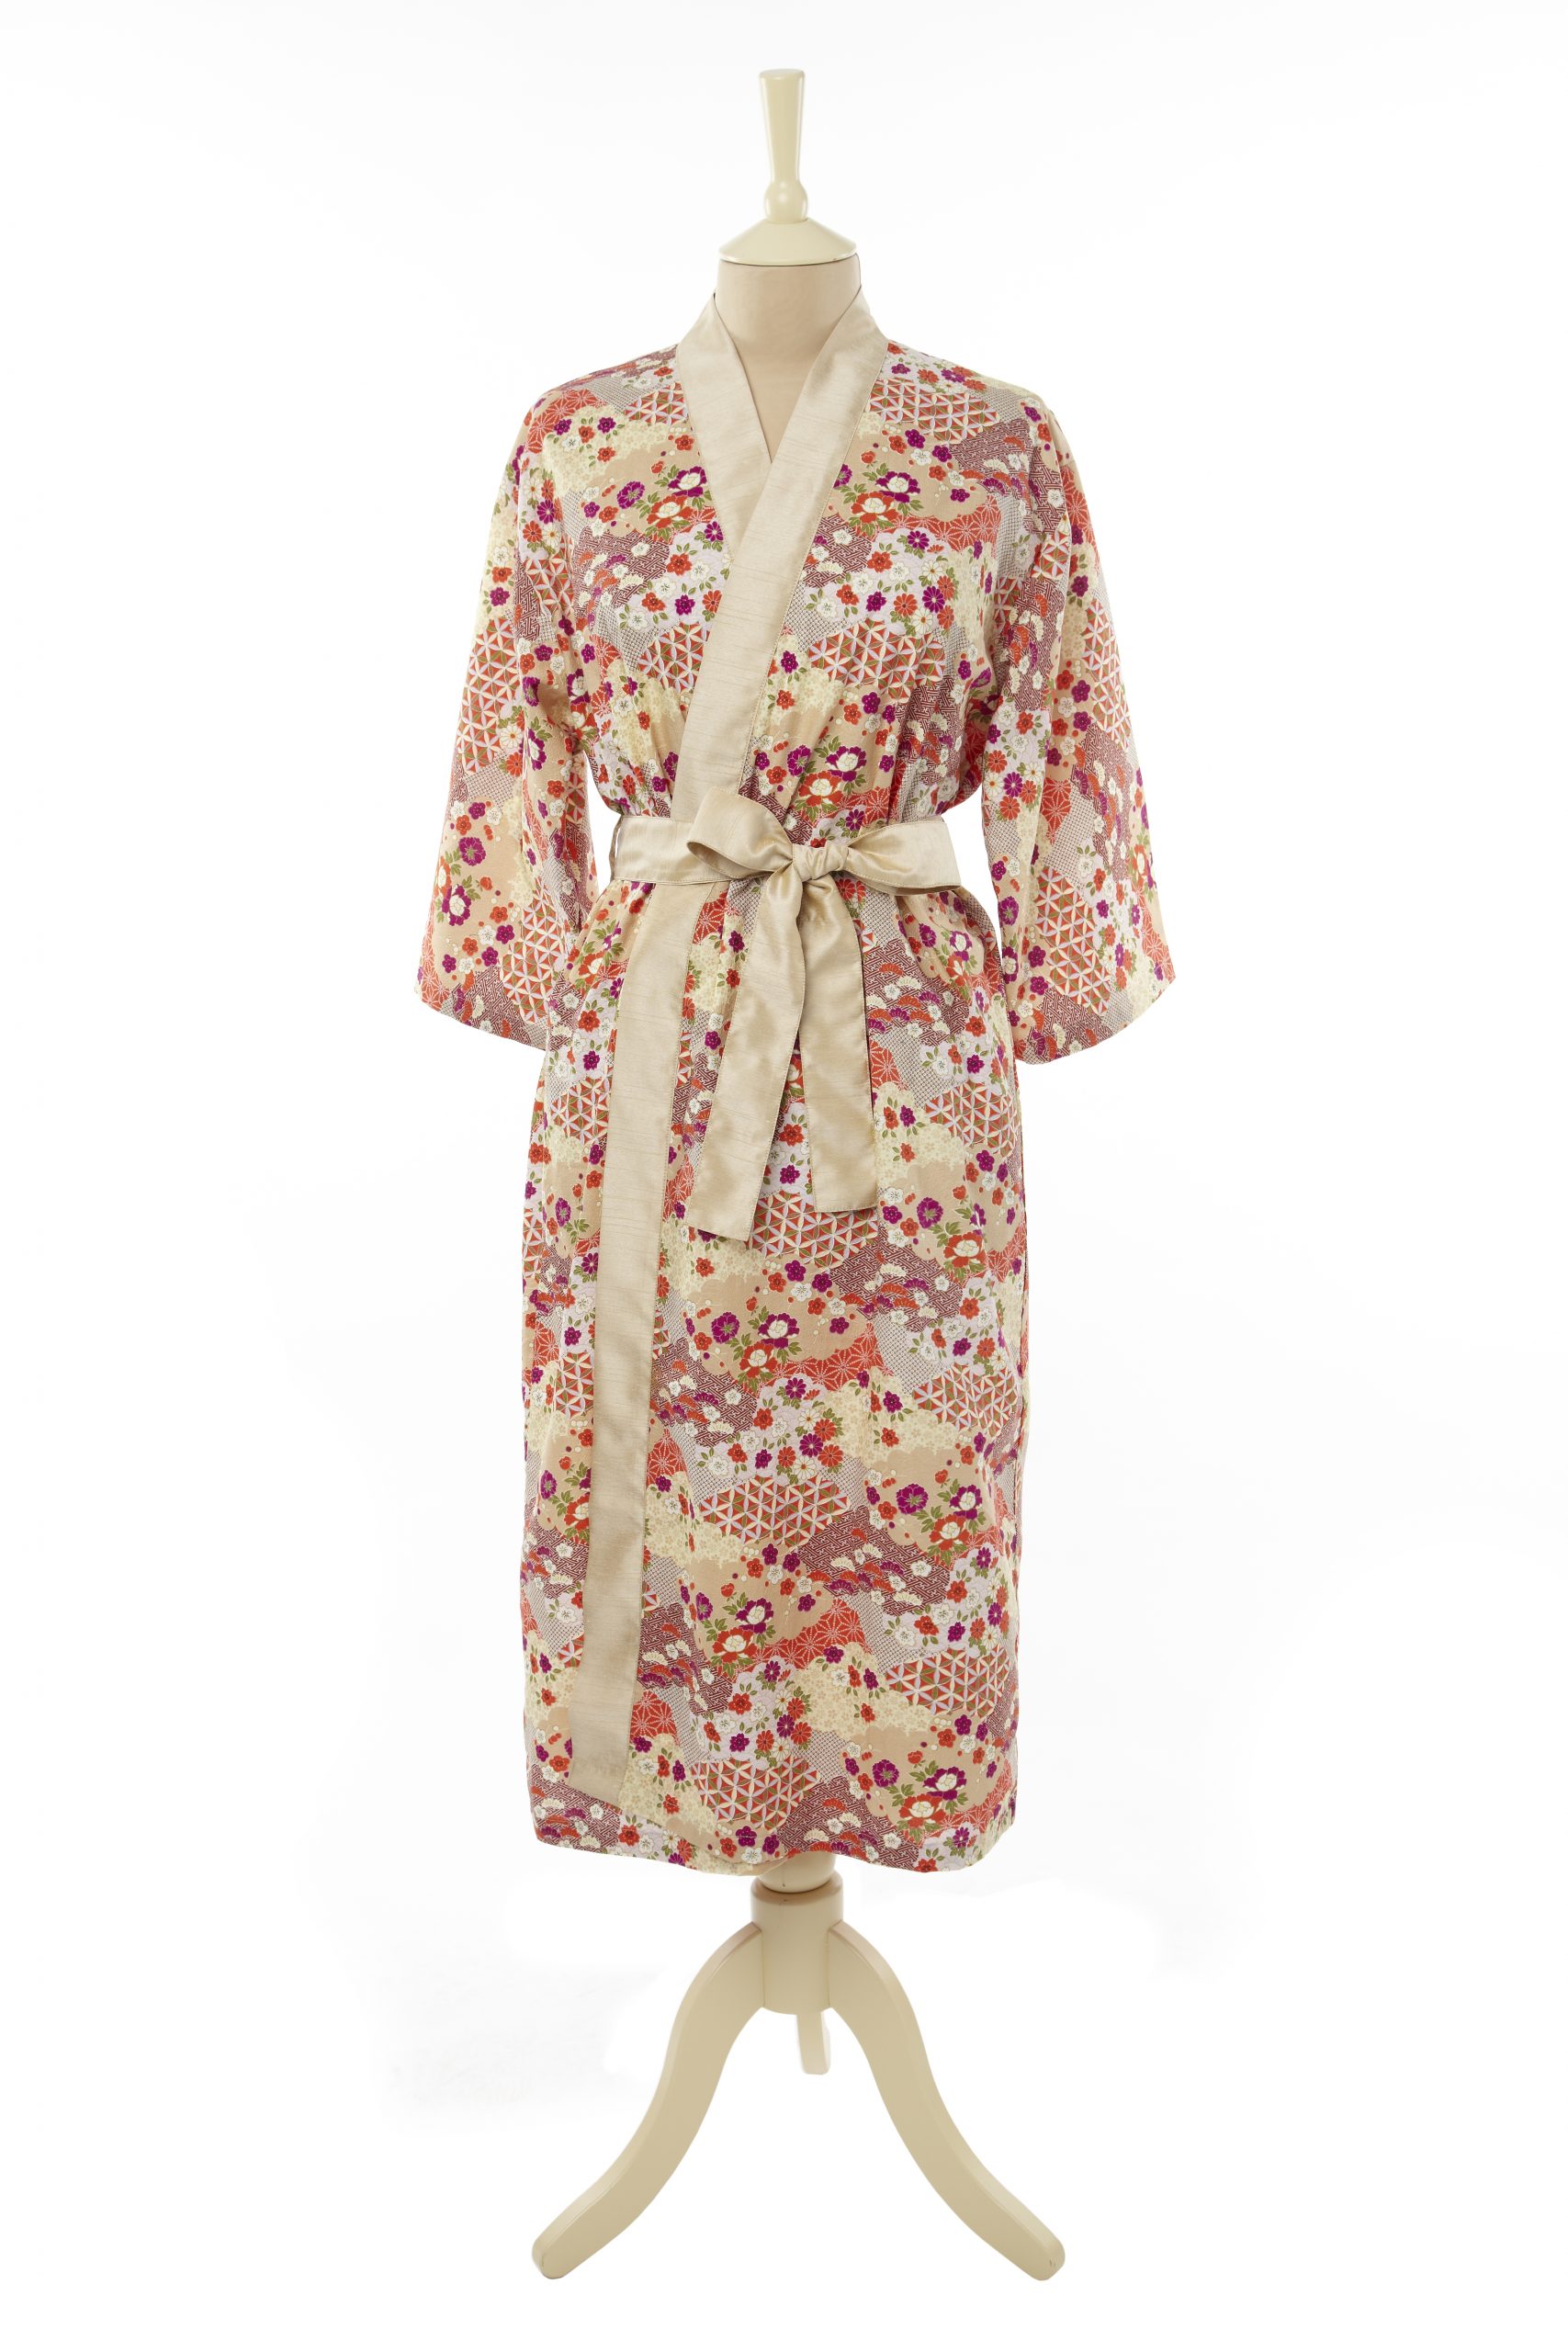 Keiko Uchida - Kimono gown, £160 - WeAreTheCity | Information ...